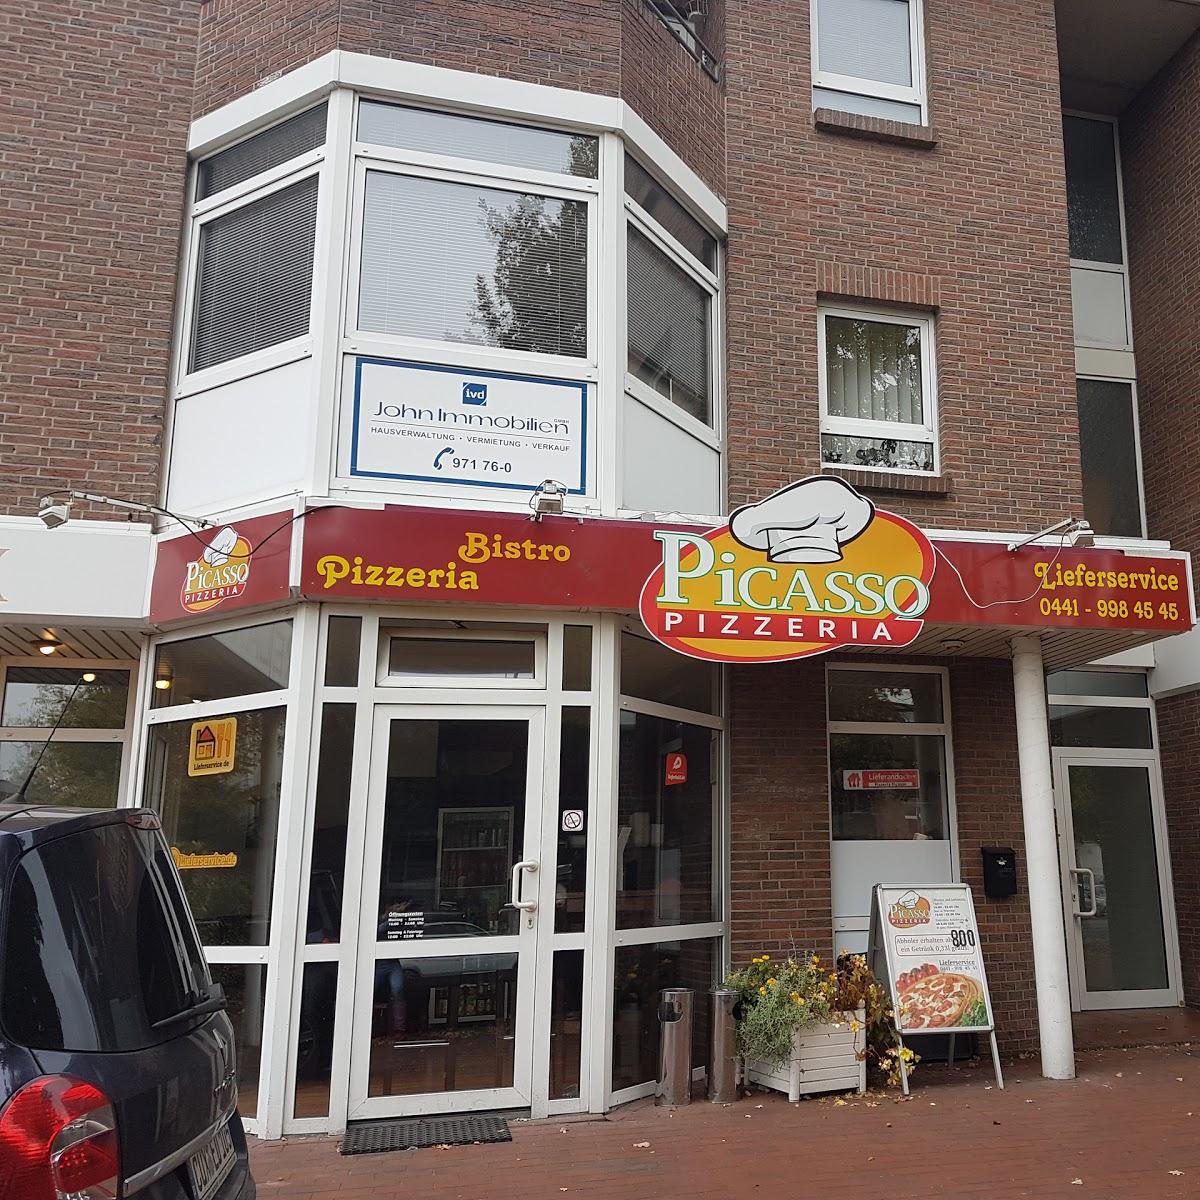 Restaurant "Pizzeria Picasso" in Oldenburg